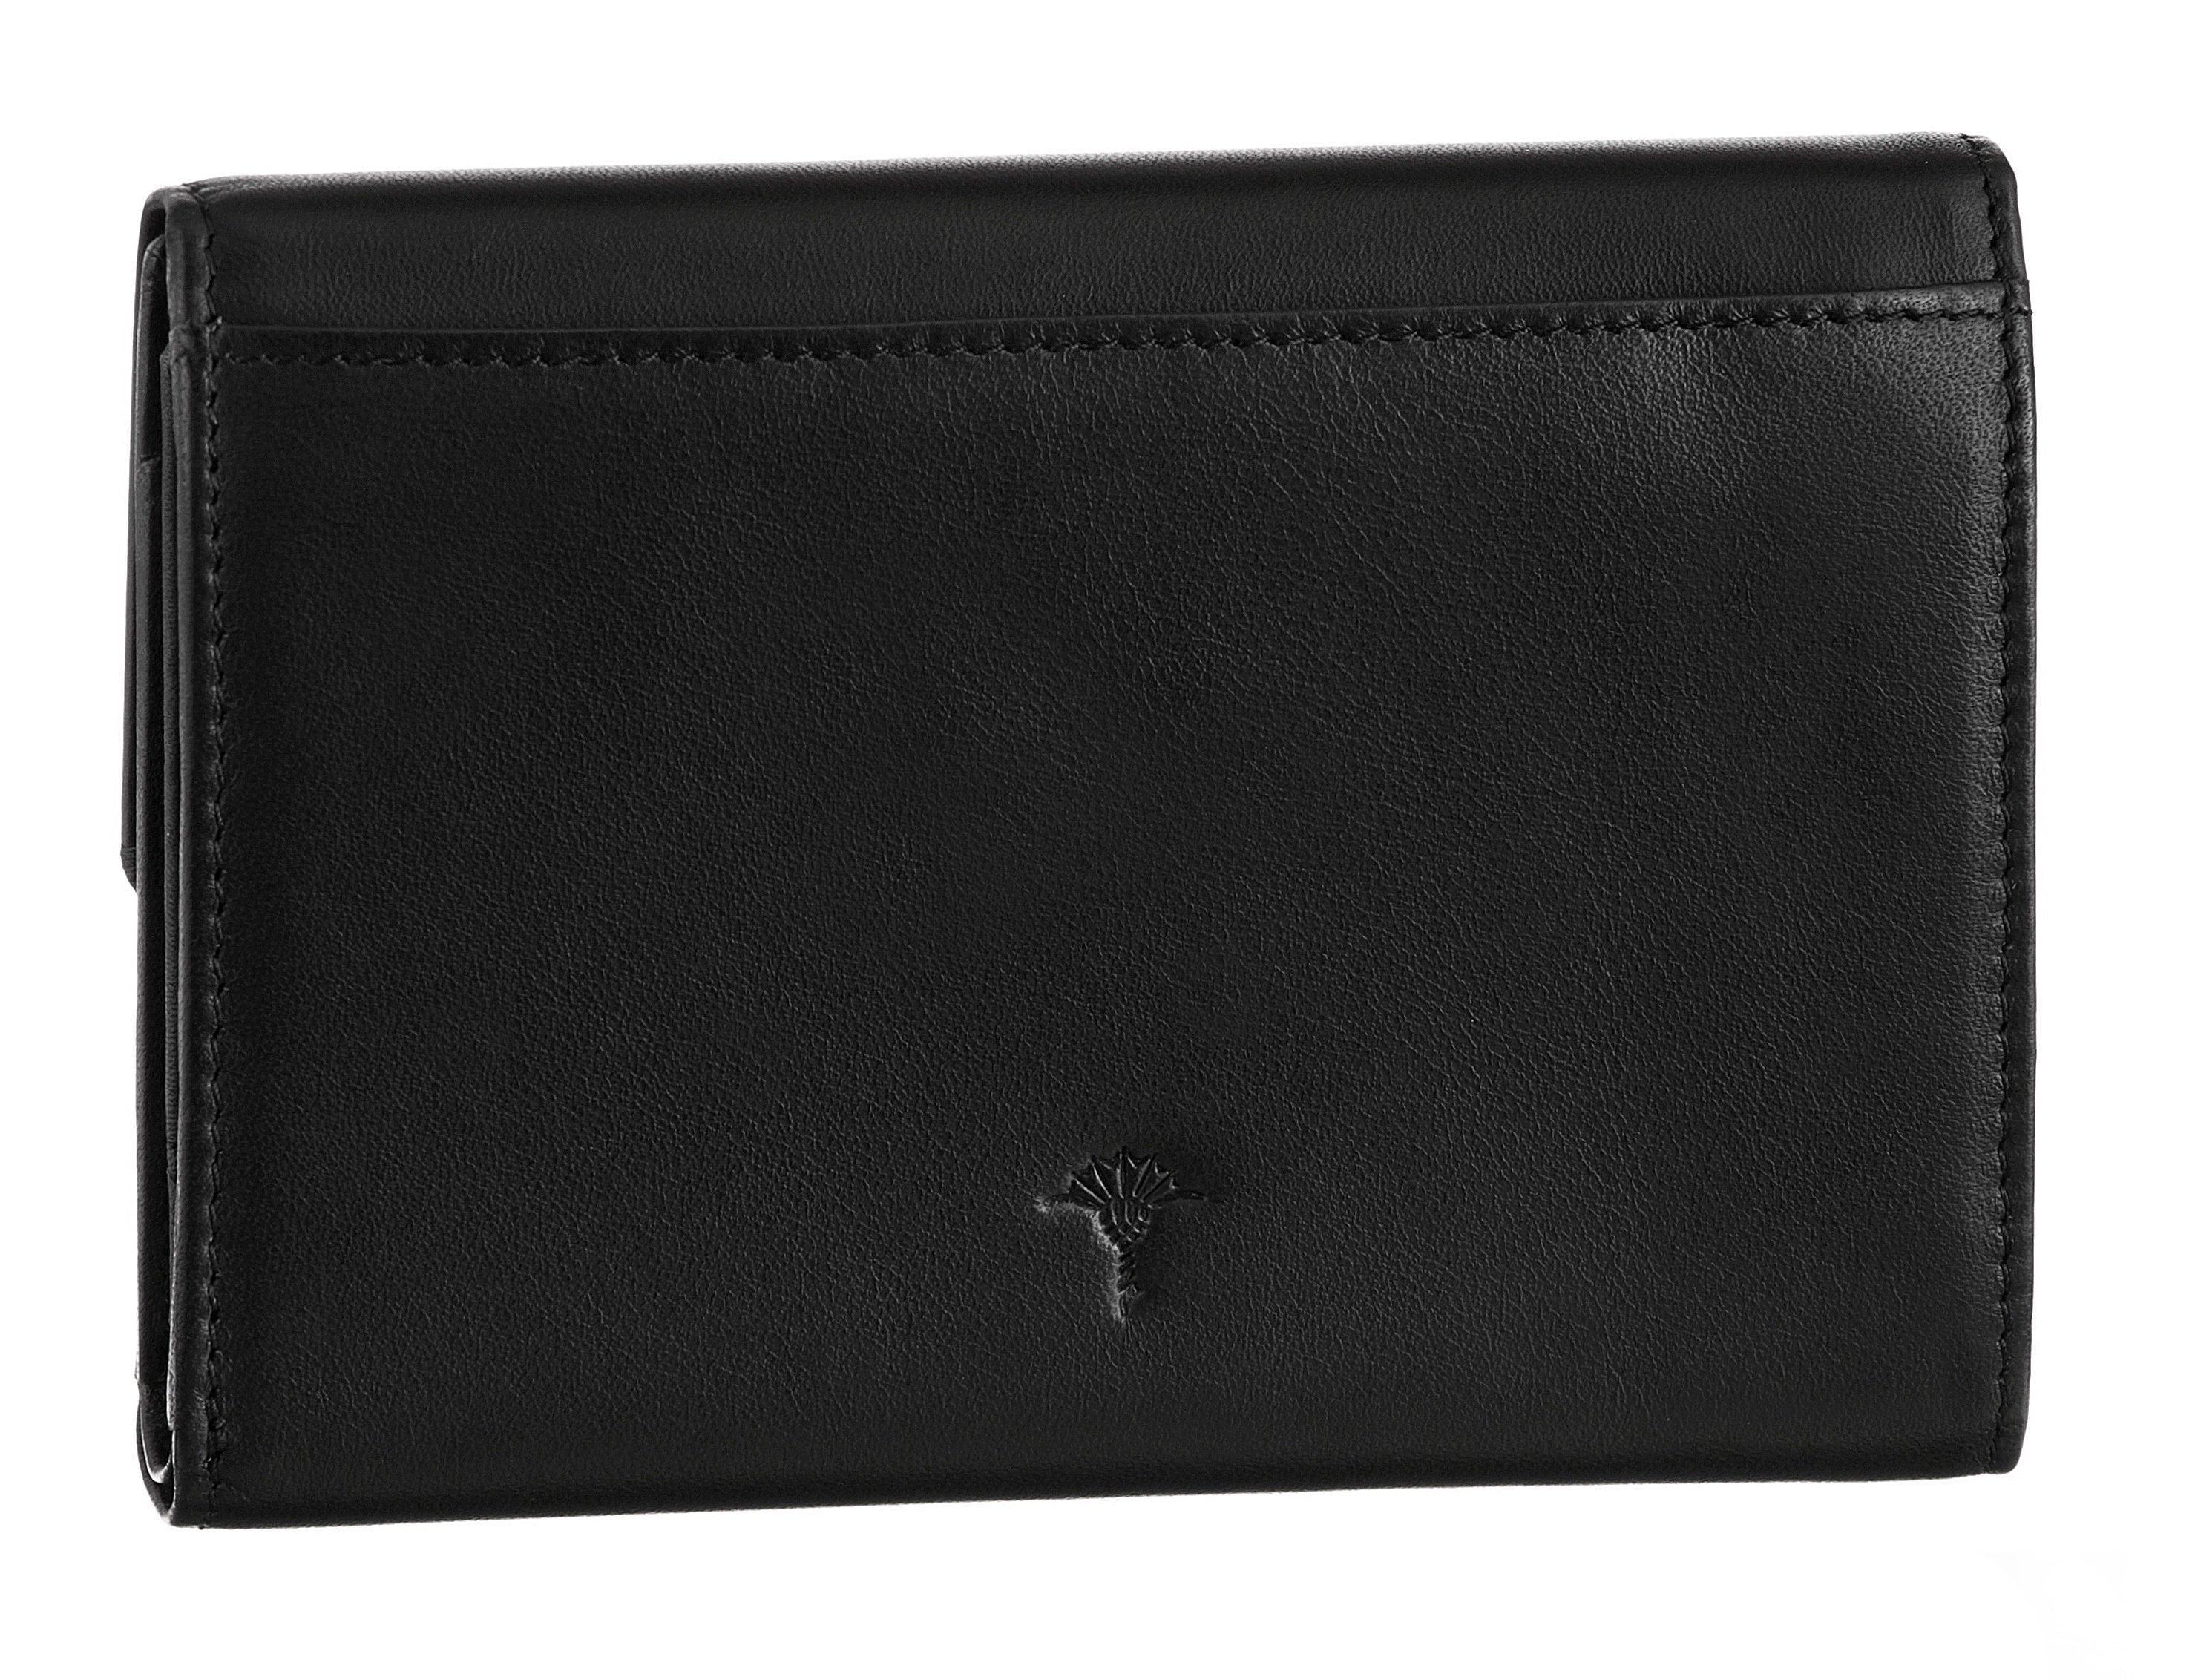 purse Design Joop! 1.0 mh10f, cosma sofisticato black Geldbörse in schlichtem